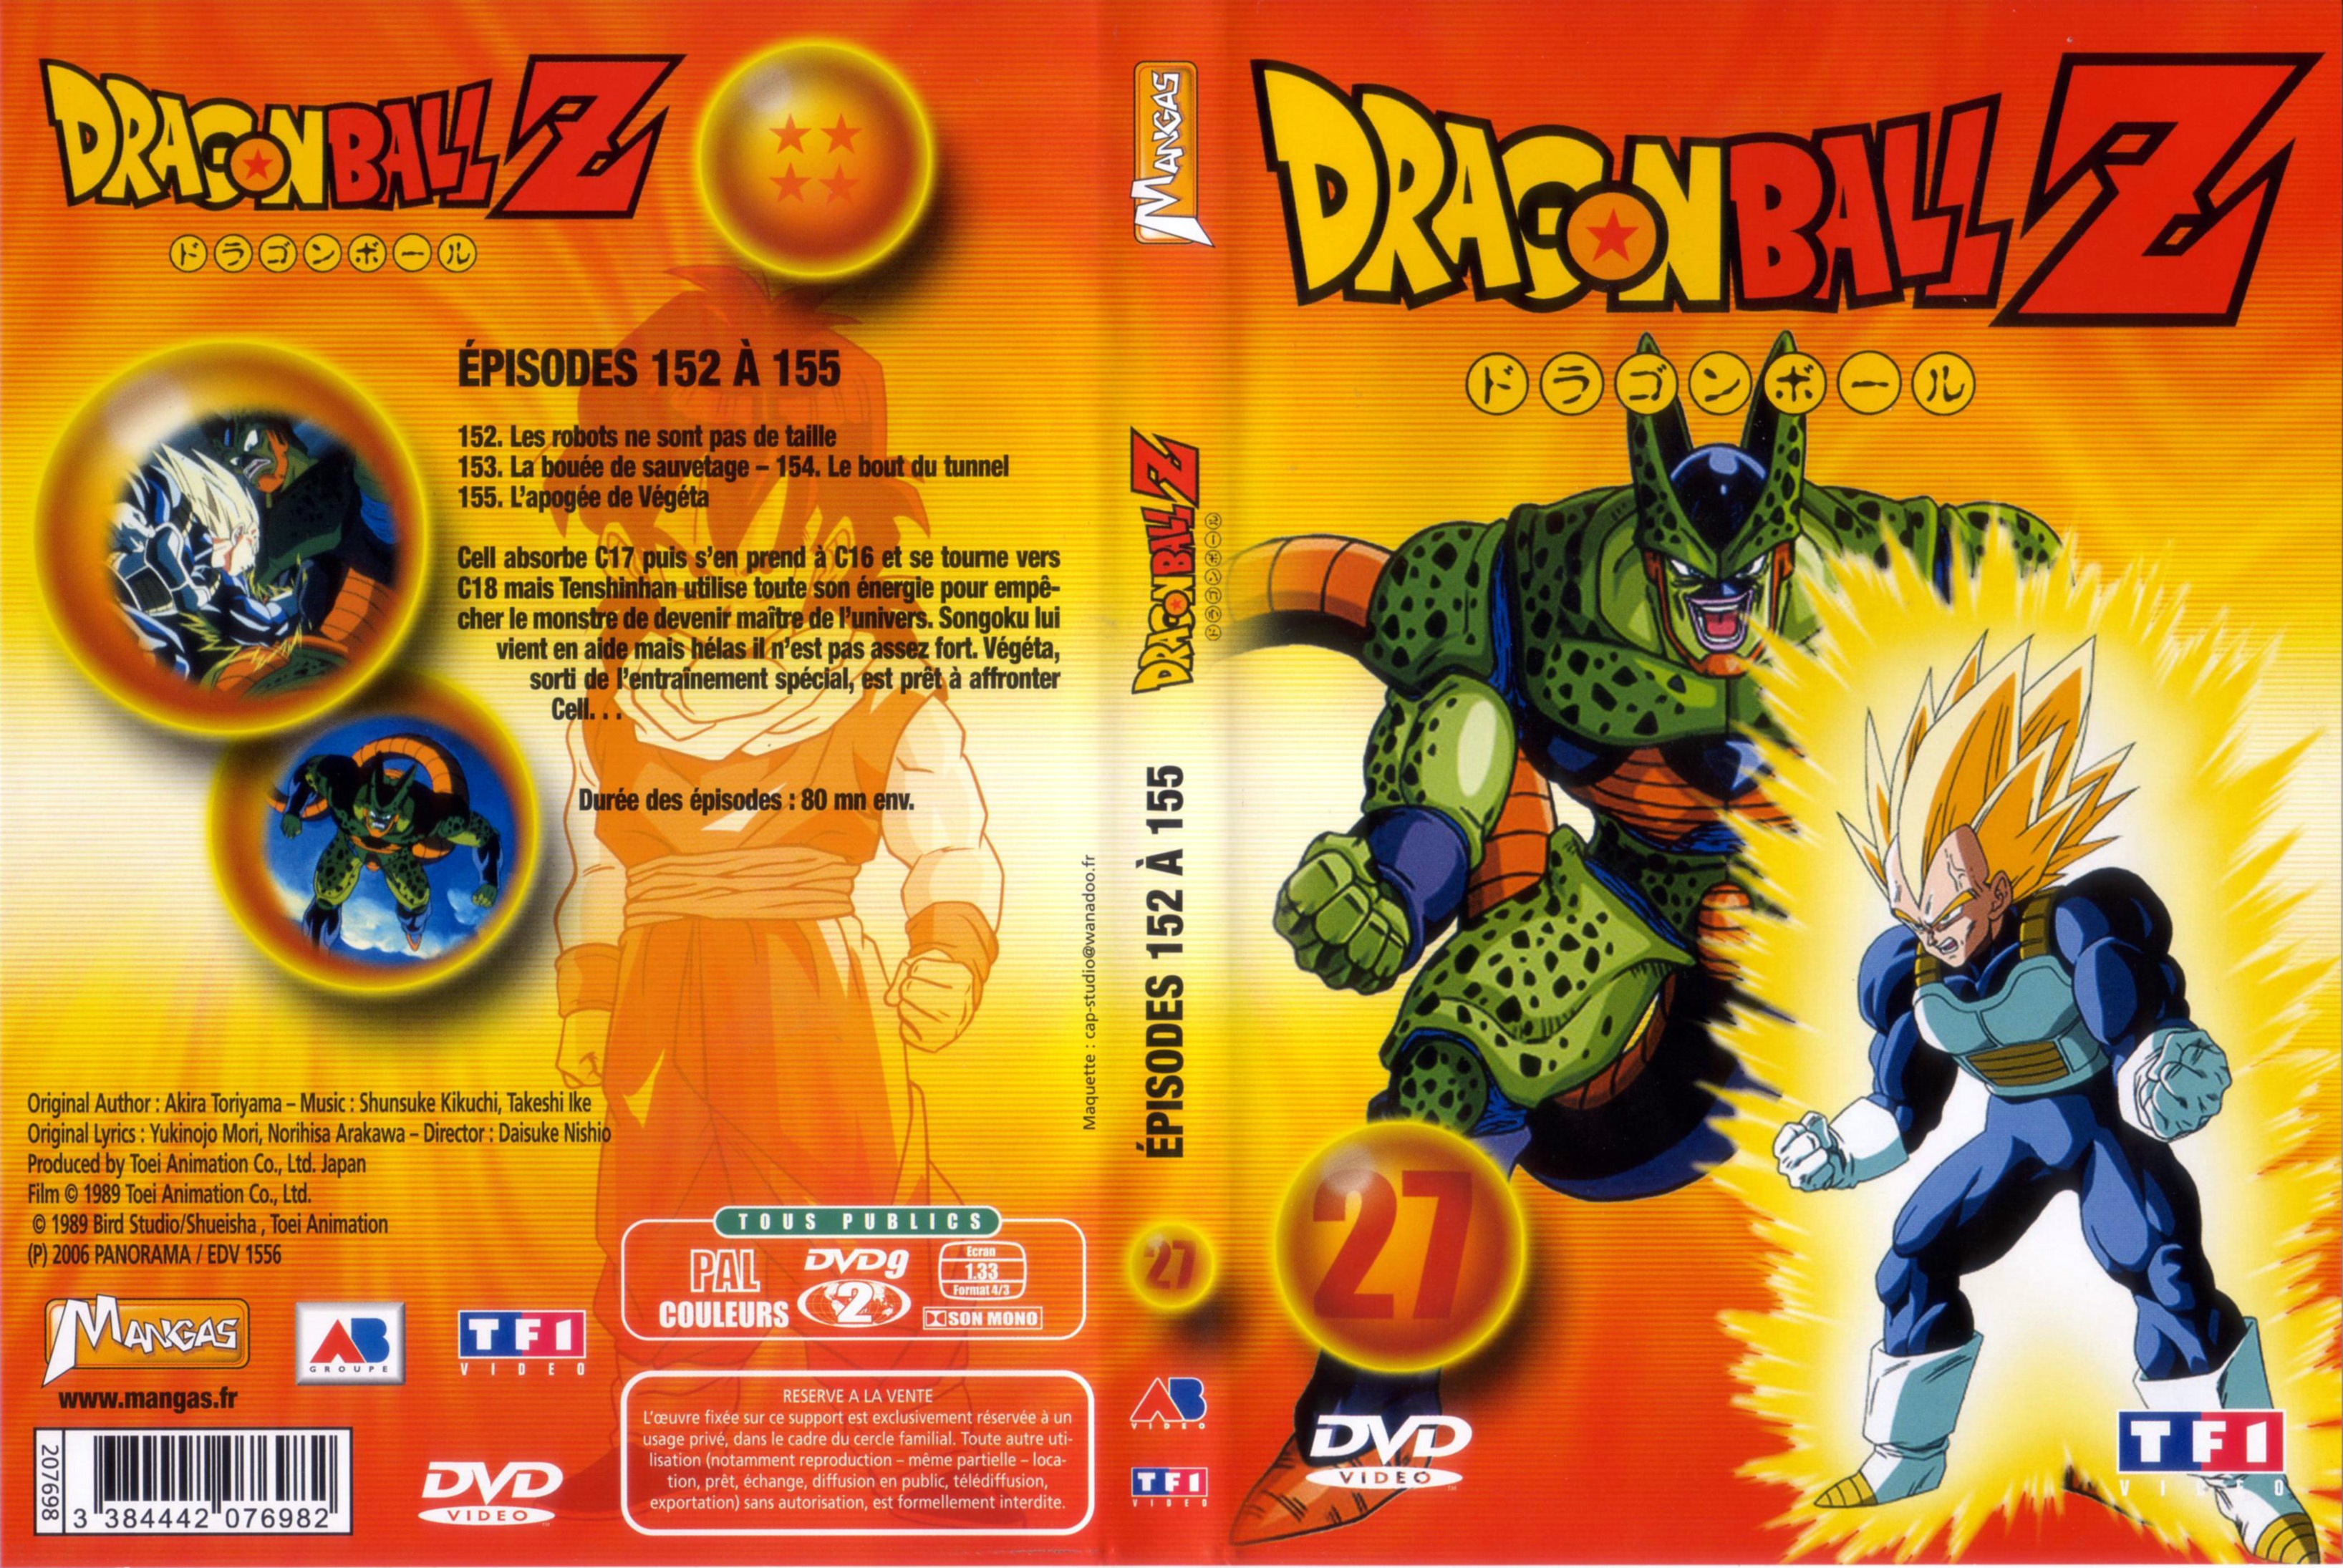 Jaquette DVD Dragon ball Z vol 27